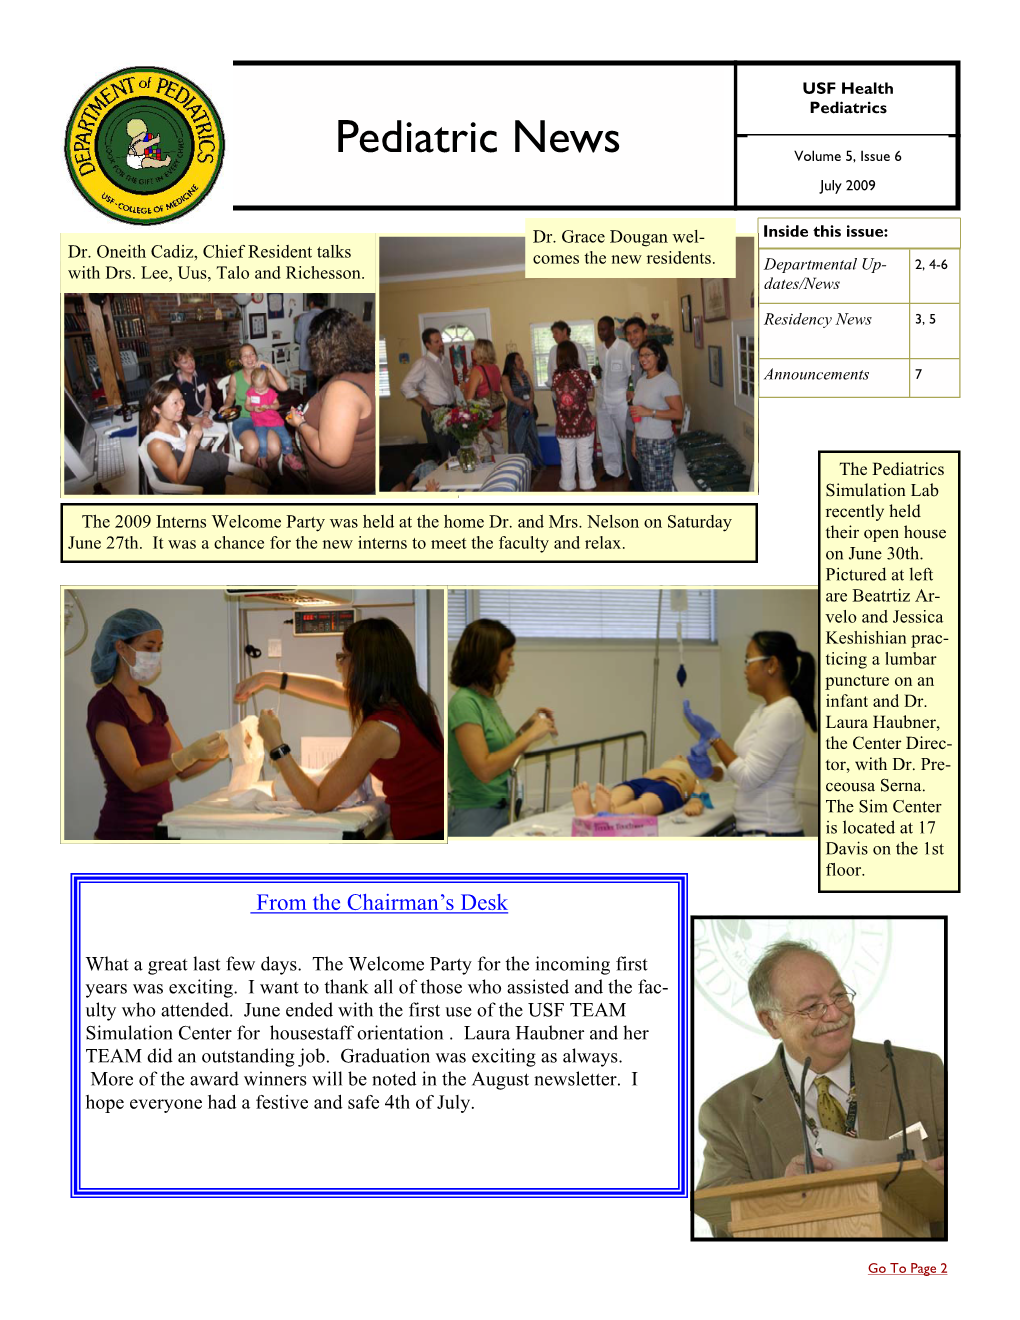 Pediatric News Volume 5, Issue 6 July 2009